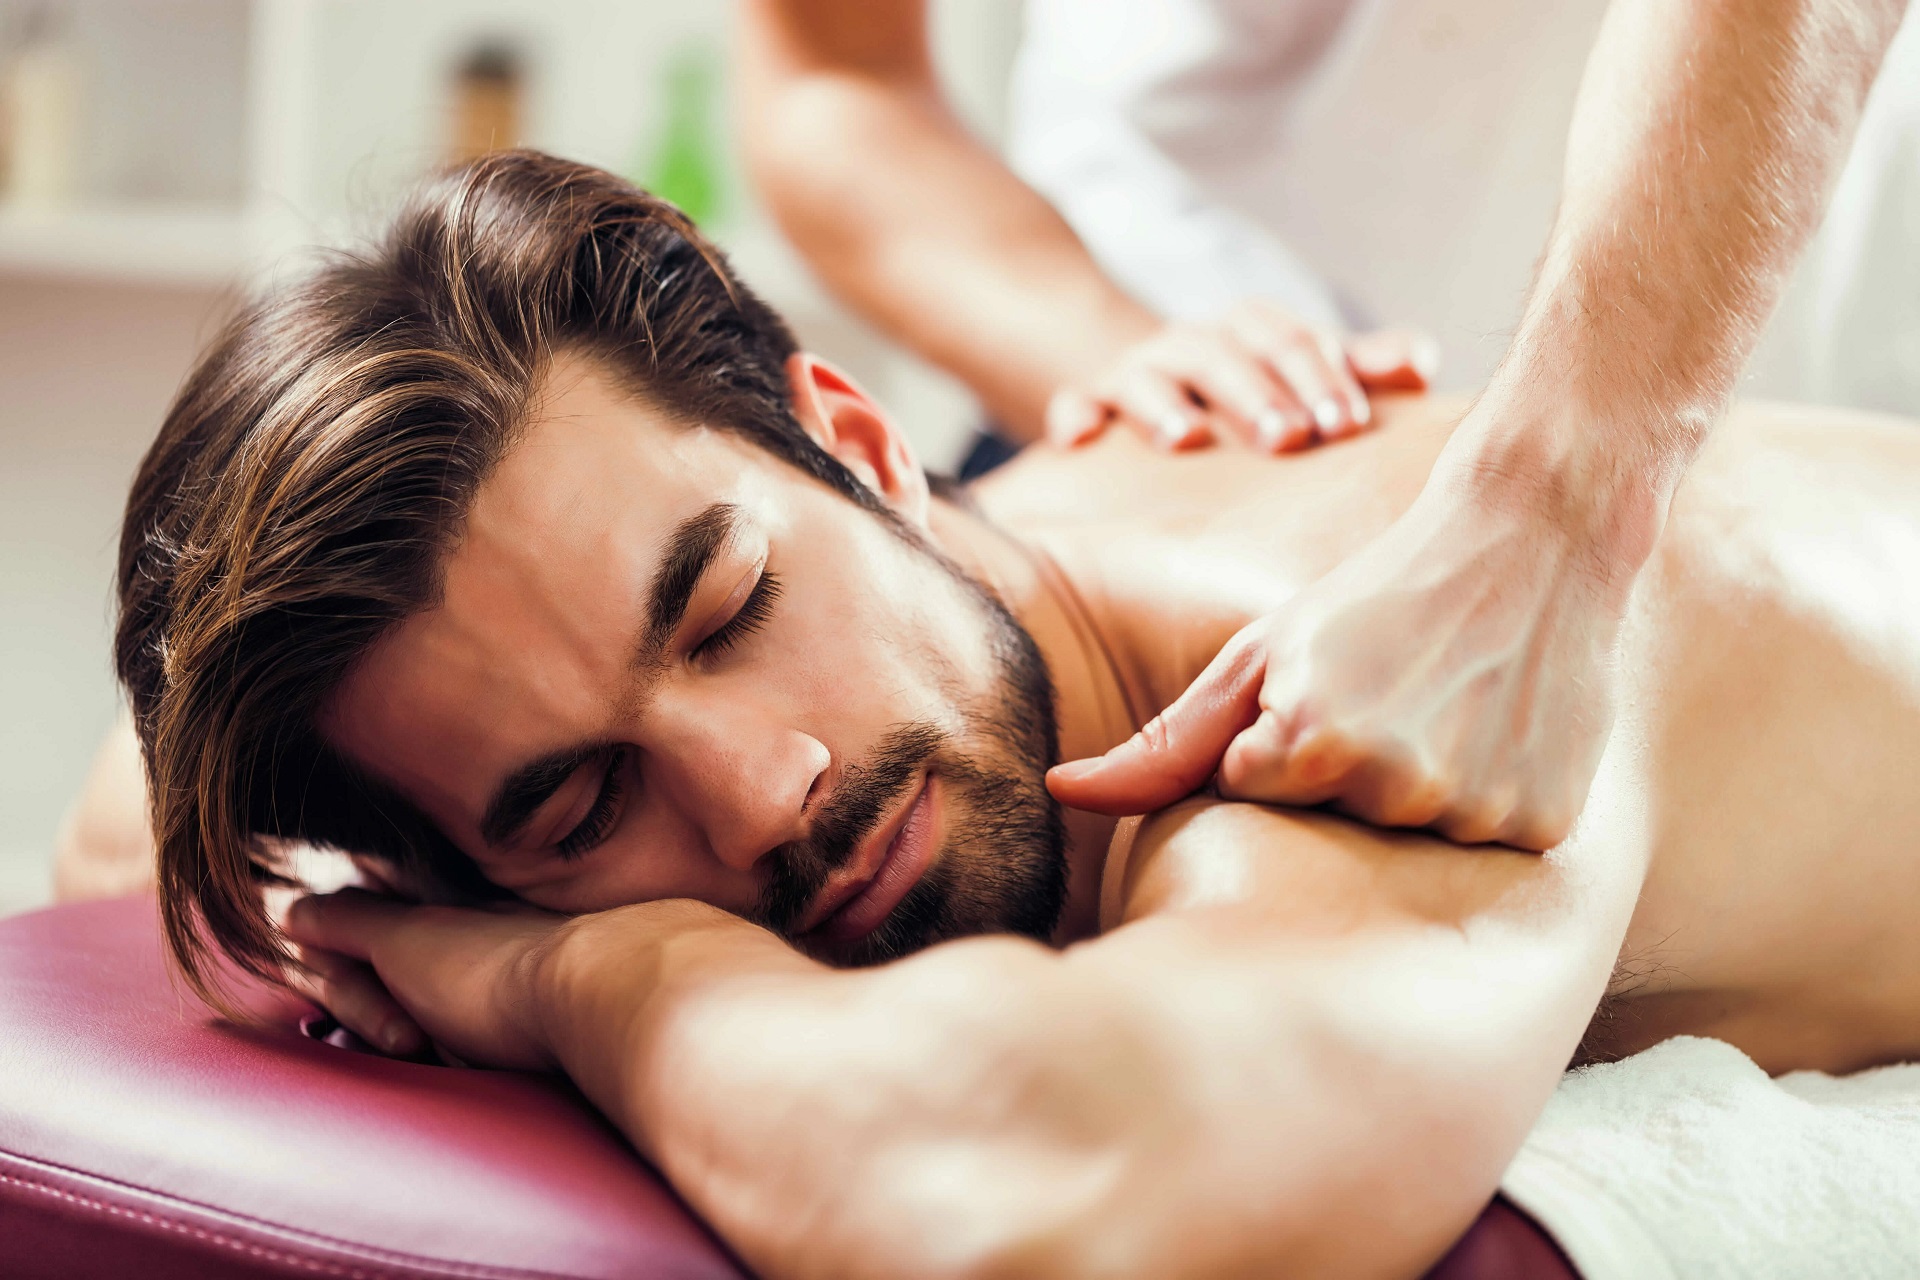 Onlyfans massage. Мужской массаж. Спа для мужчин. Массаж спины мужчине. Спа массаж для мужчин.